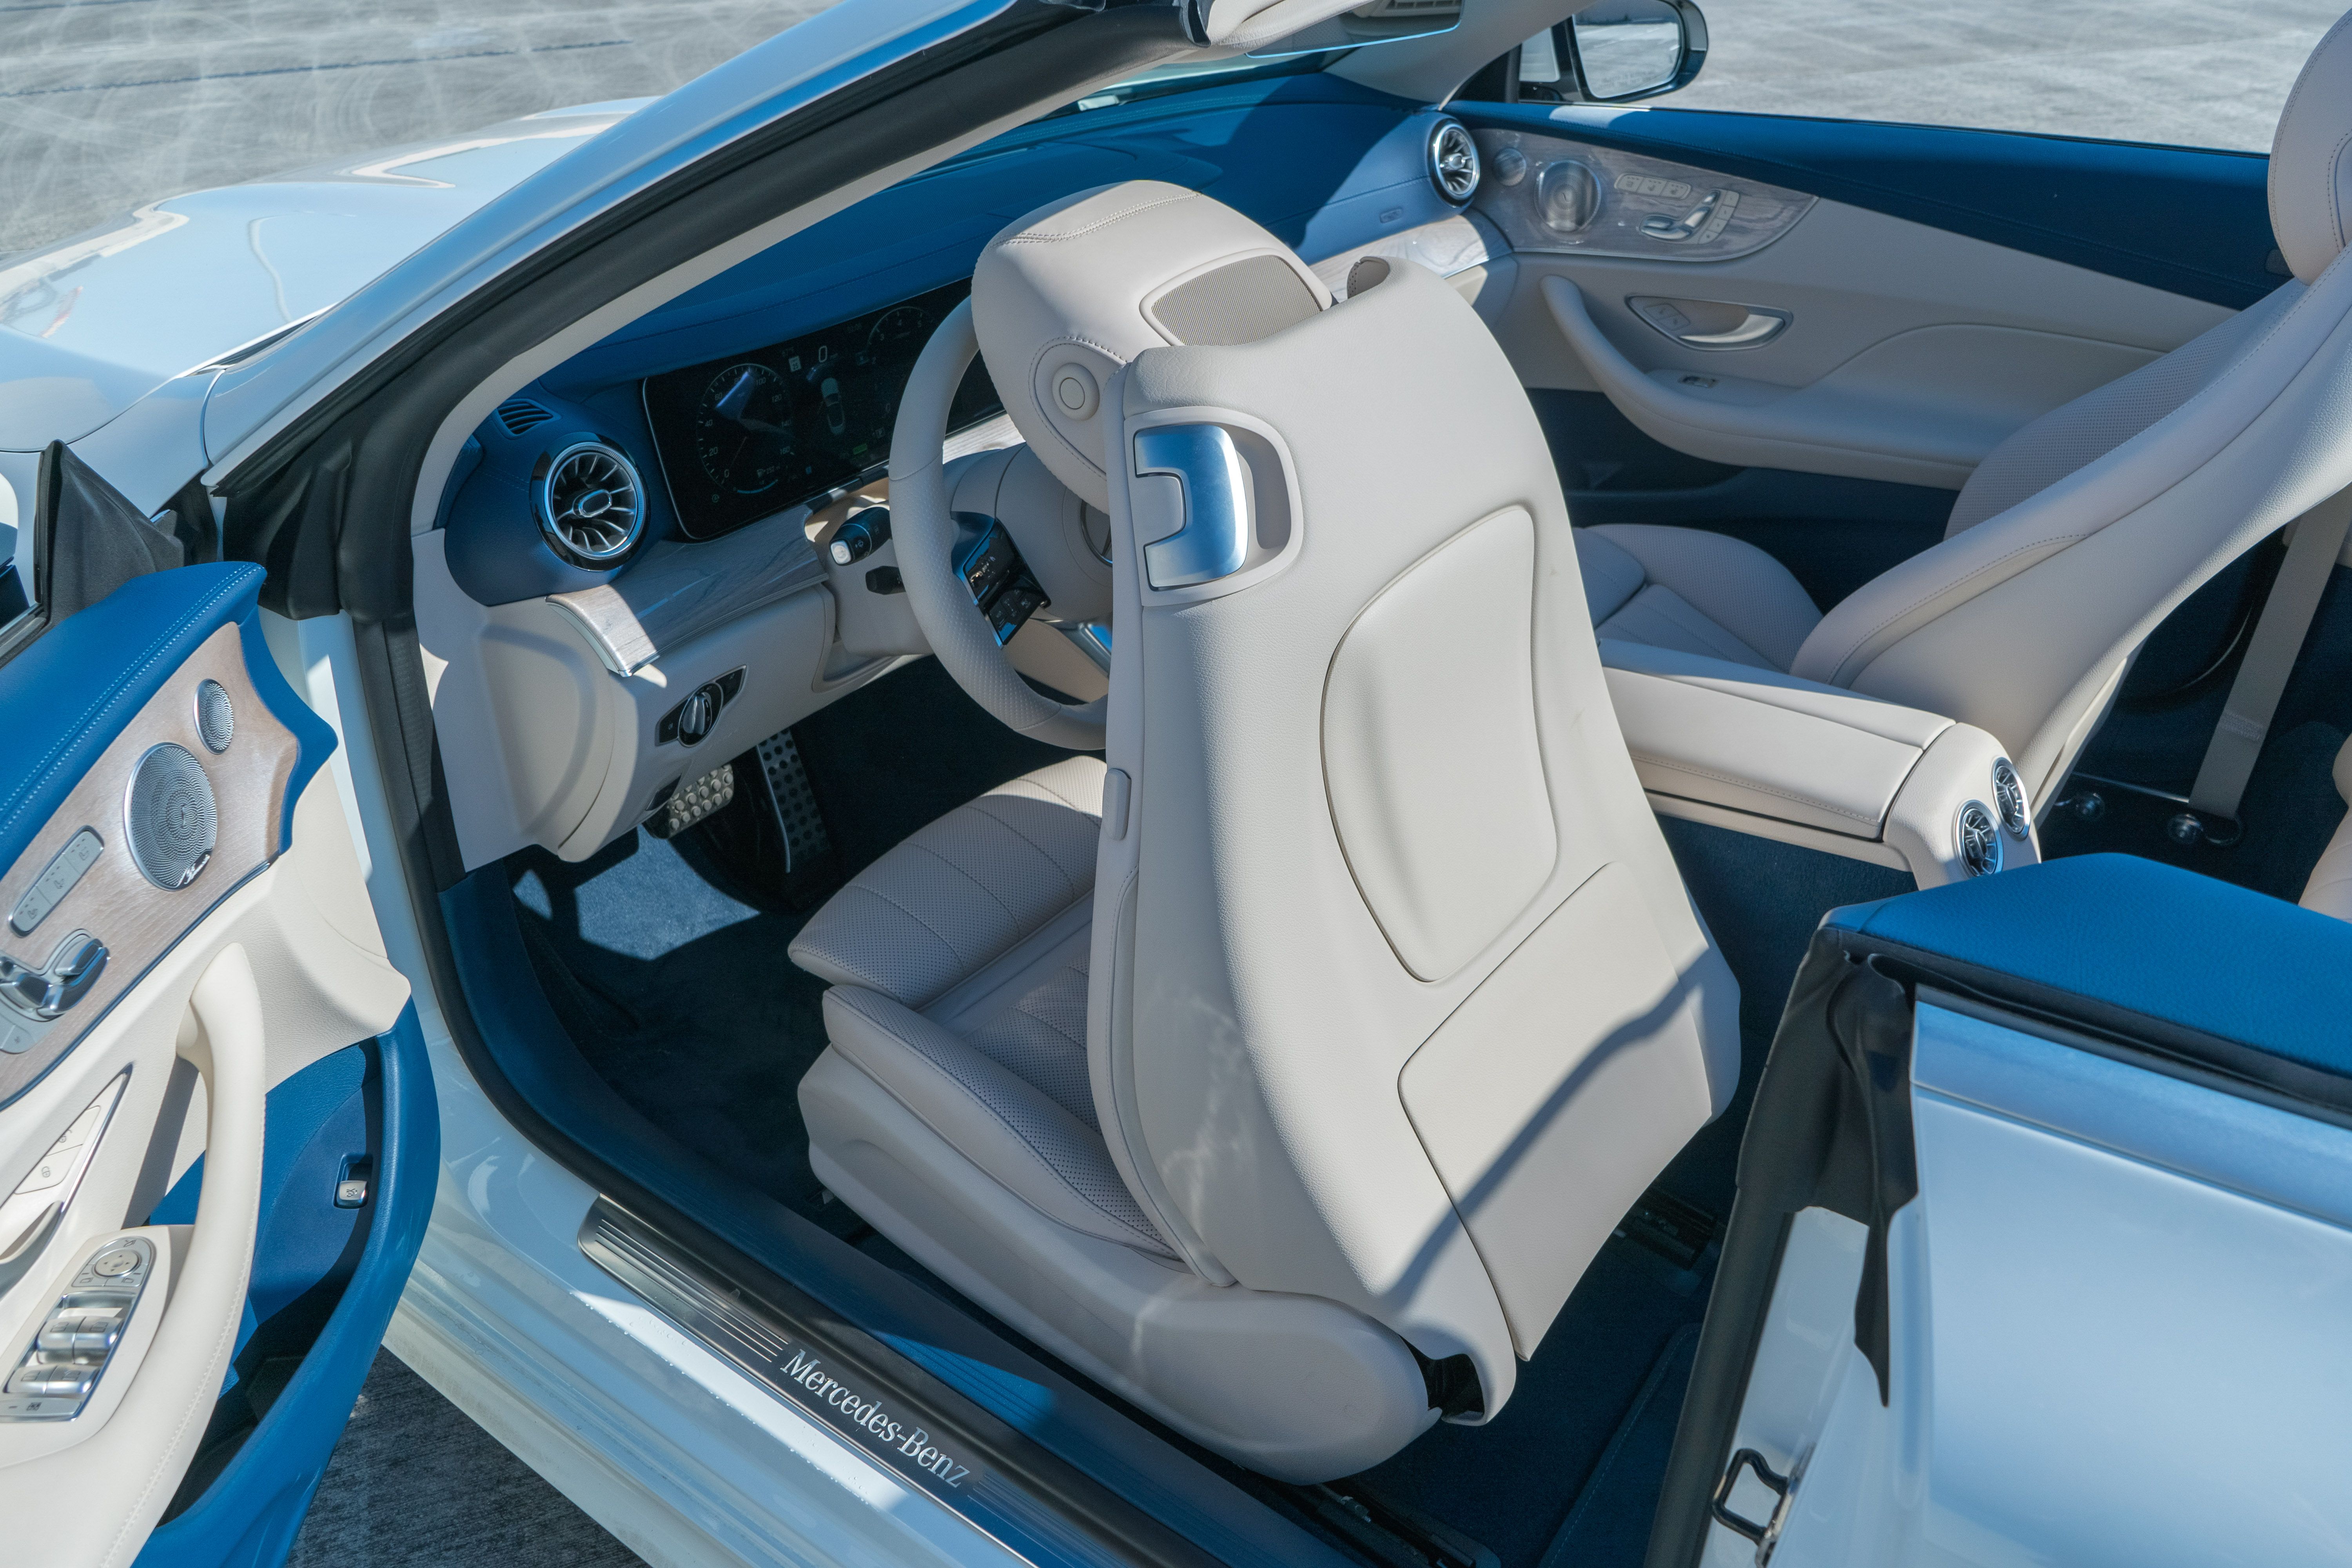 2020 Mercedes E450 Cabriolet - Driven